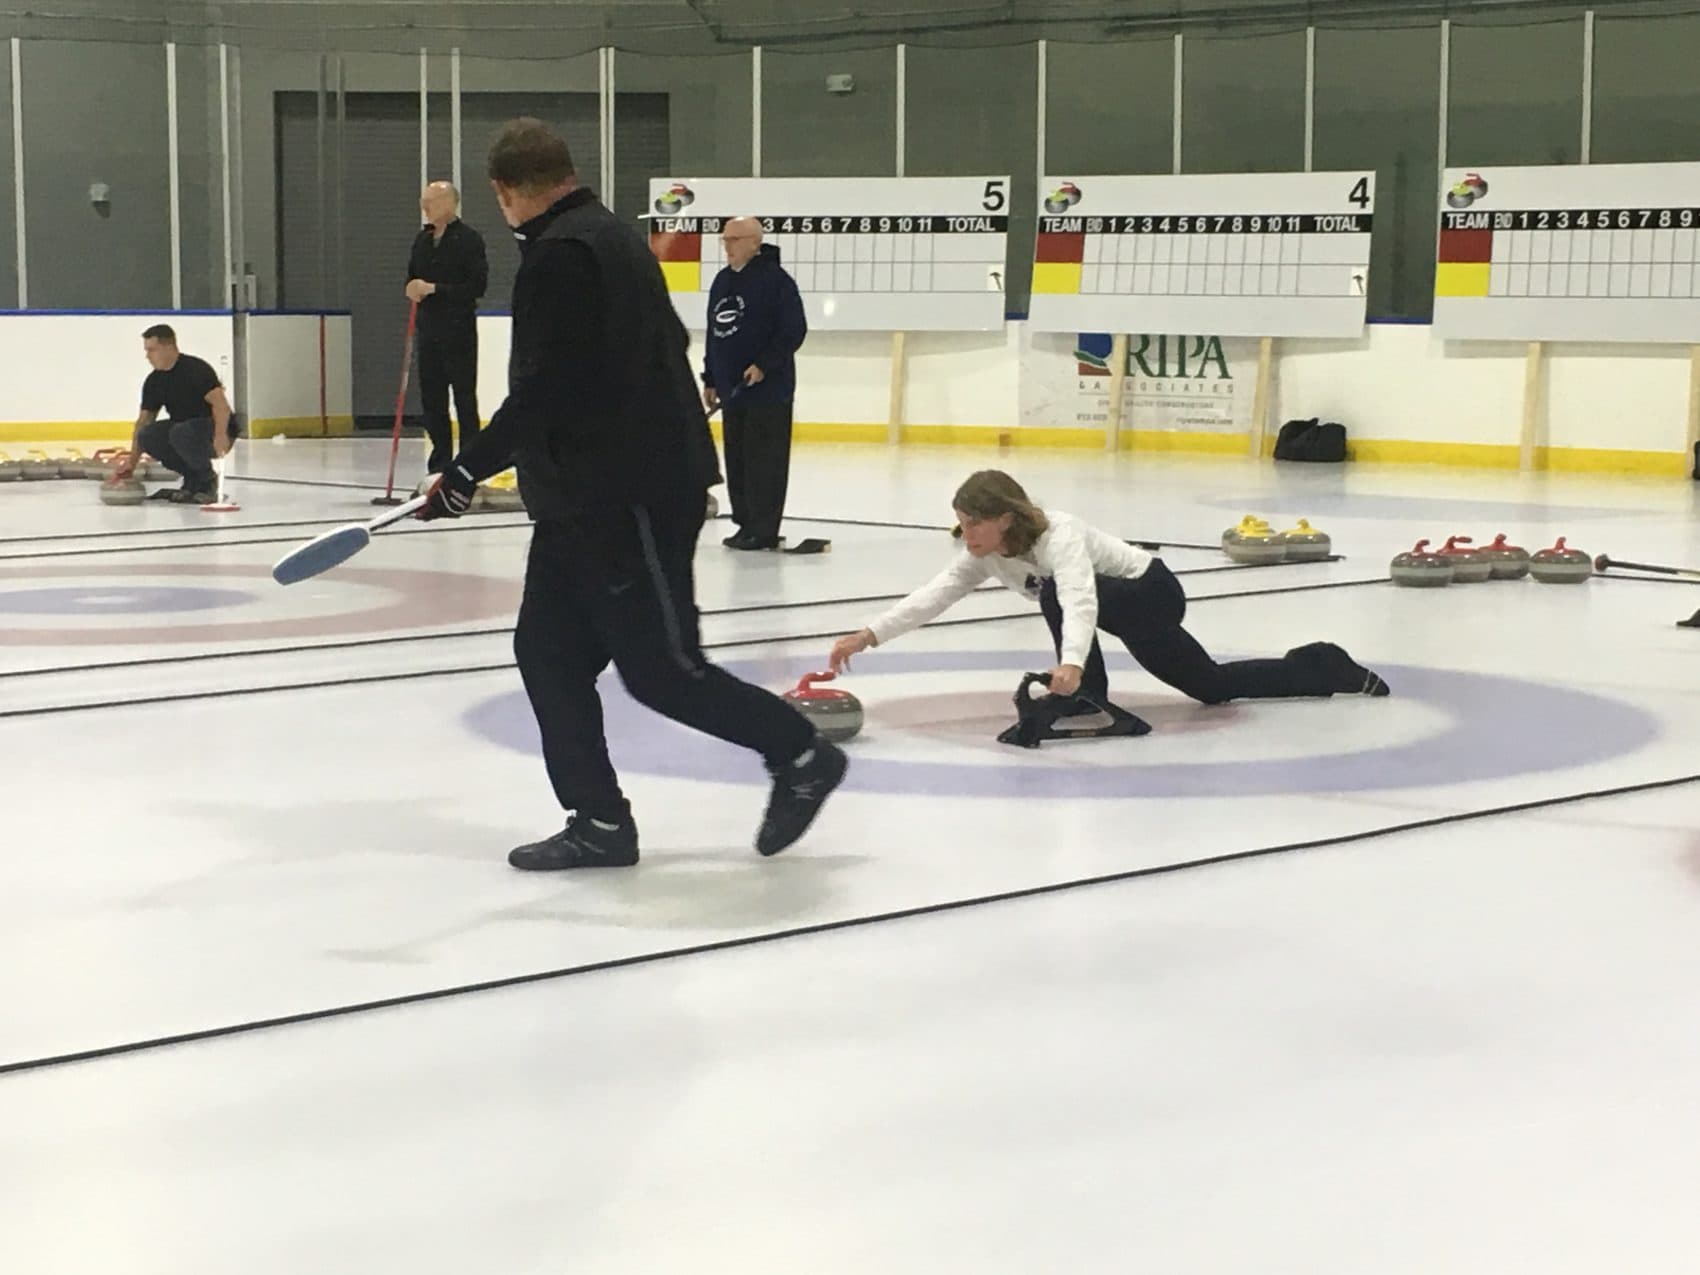 Members of the Tampa Bay Curling Club in action. (Courtesy Karen Hooper)